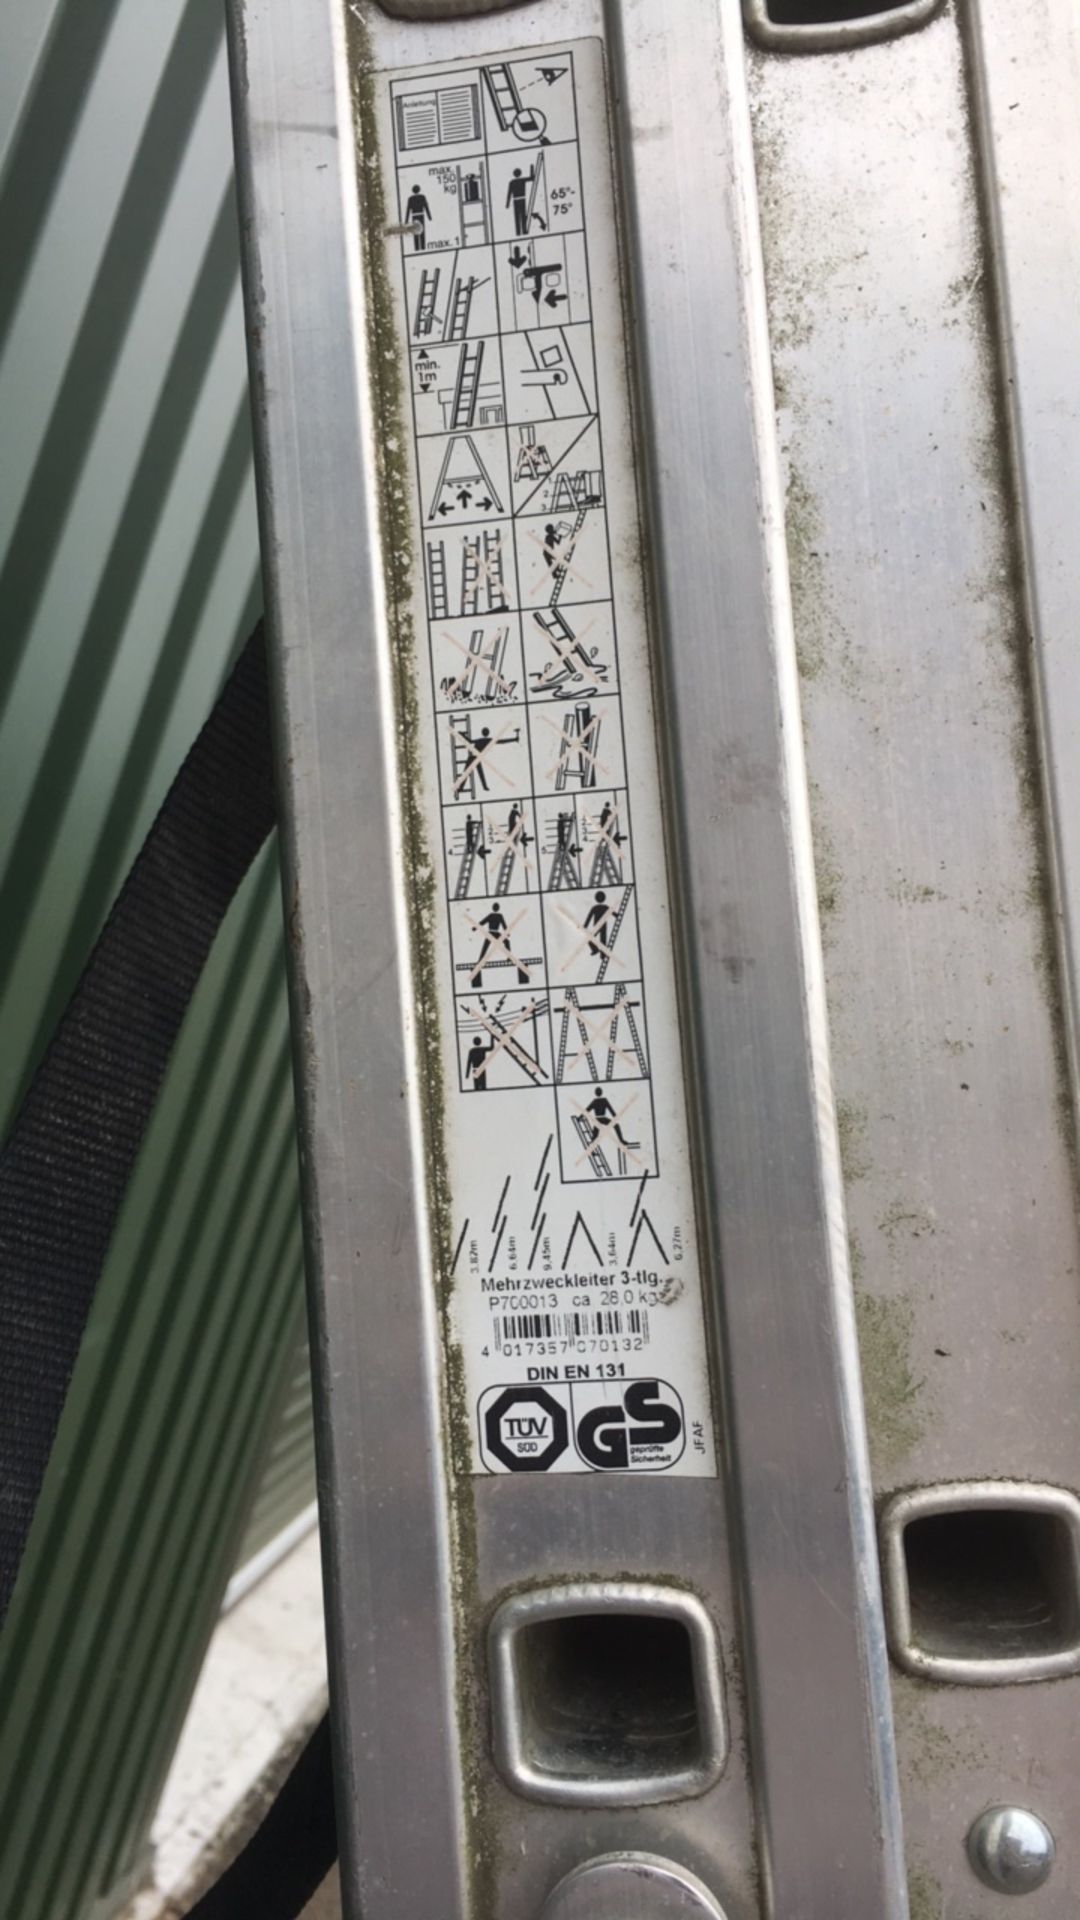 Clow aluminium ladder (A764387) - Image 4 of 4